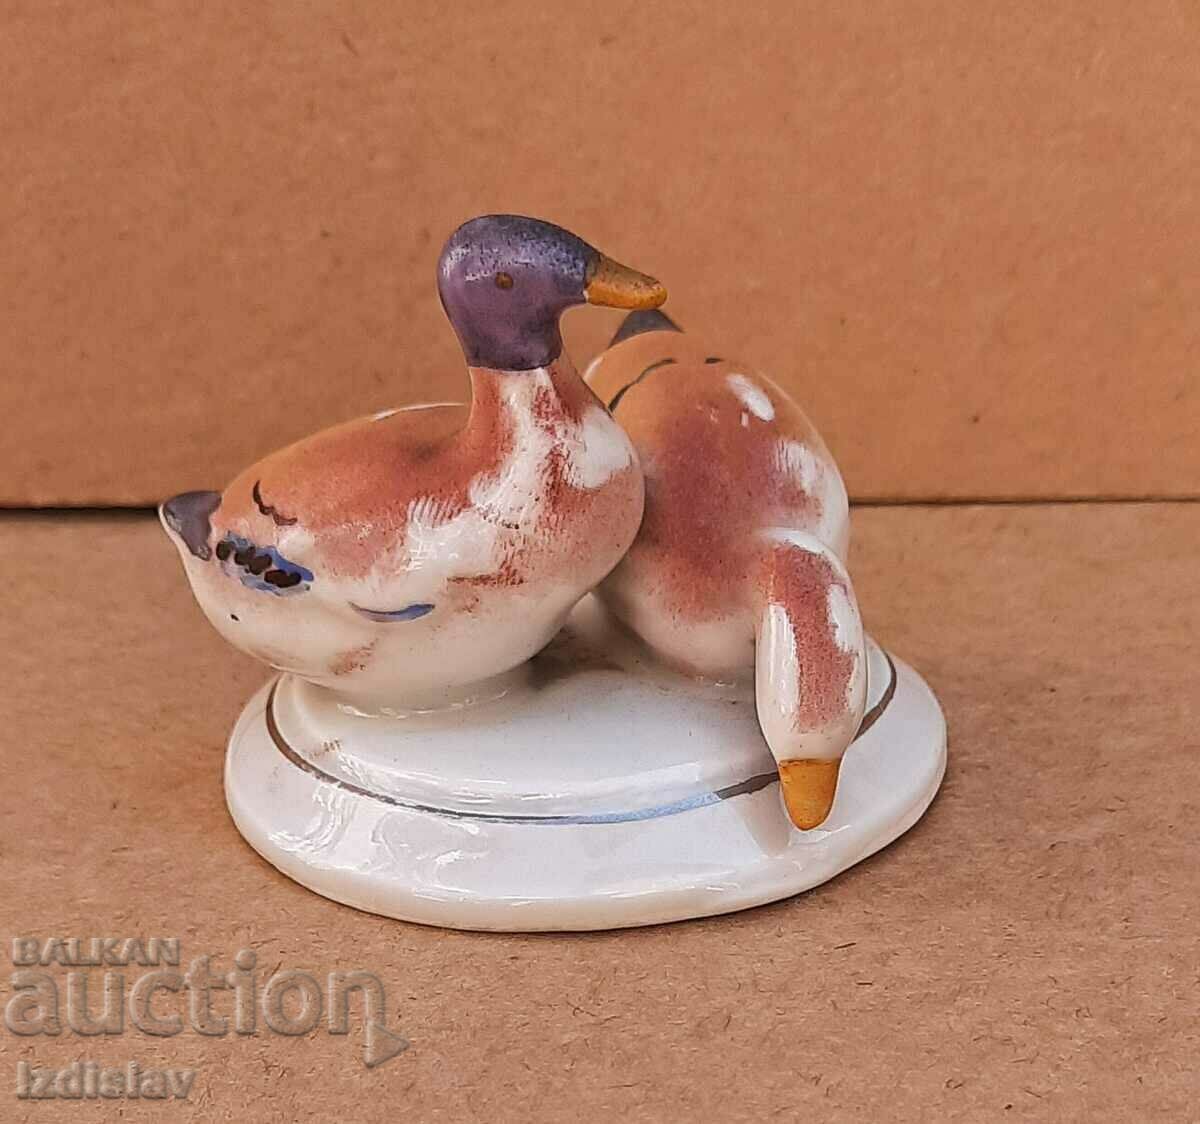 Old porcelain figure ducks